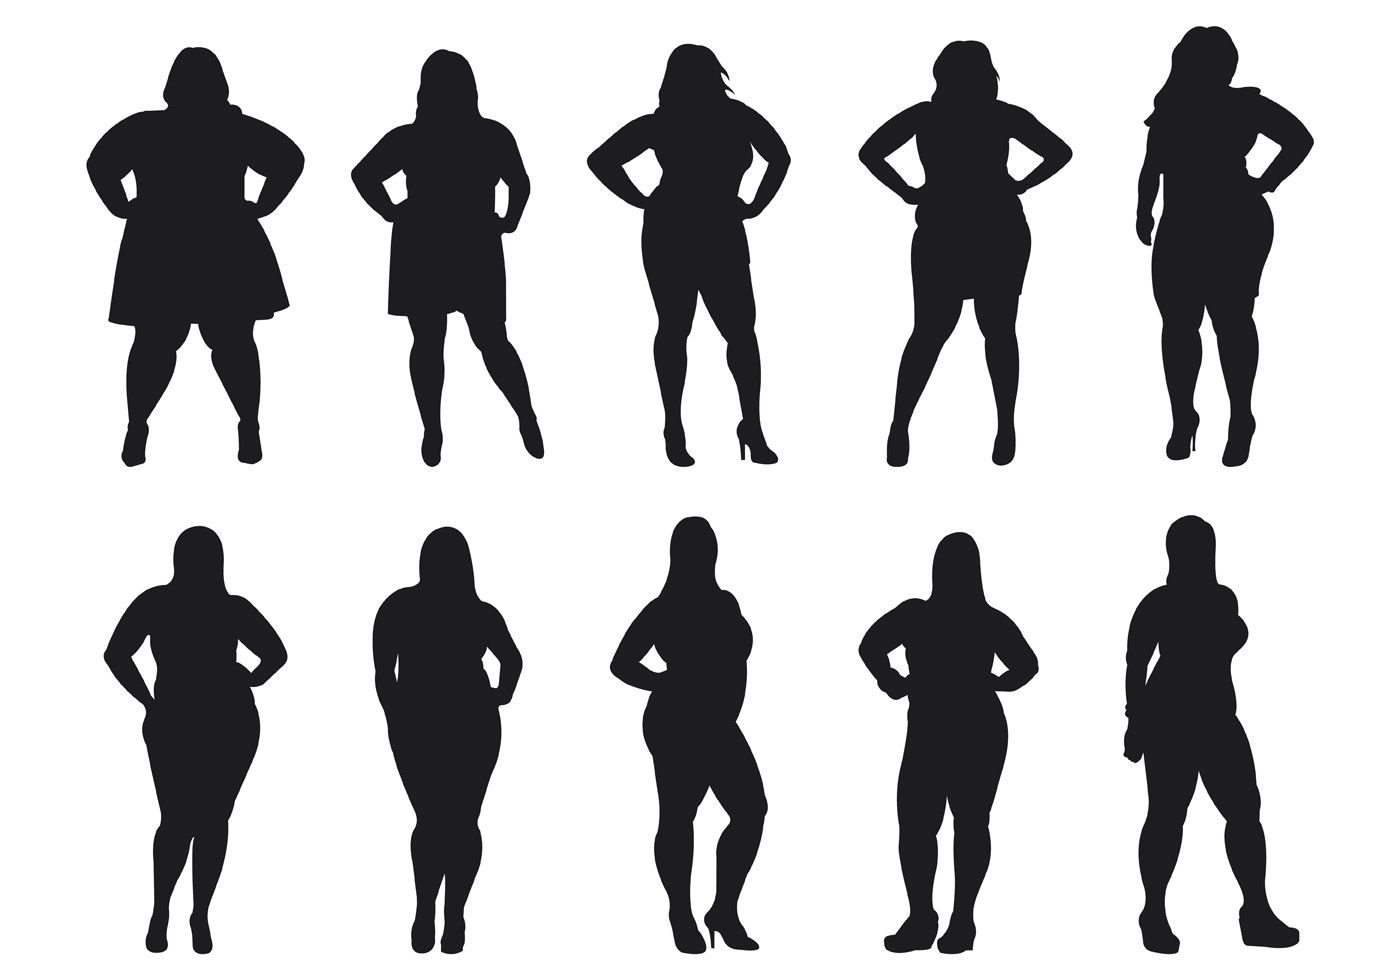 Download Fat Women Silhouettes Vector 118299 - Download Free Vectors, Clipart Graphics & Vector Art